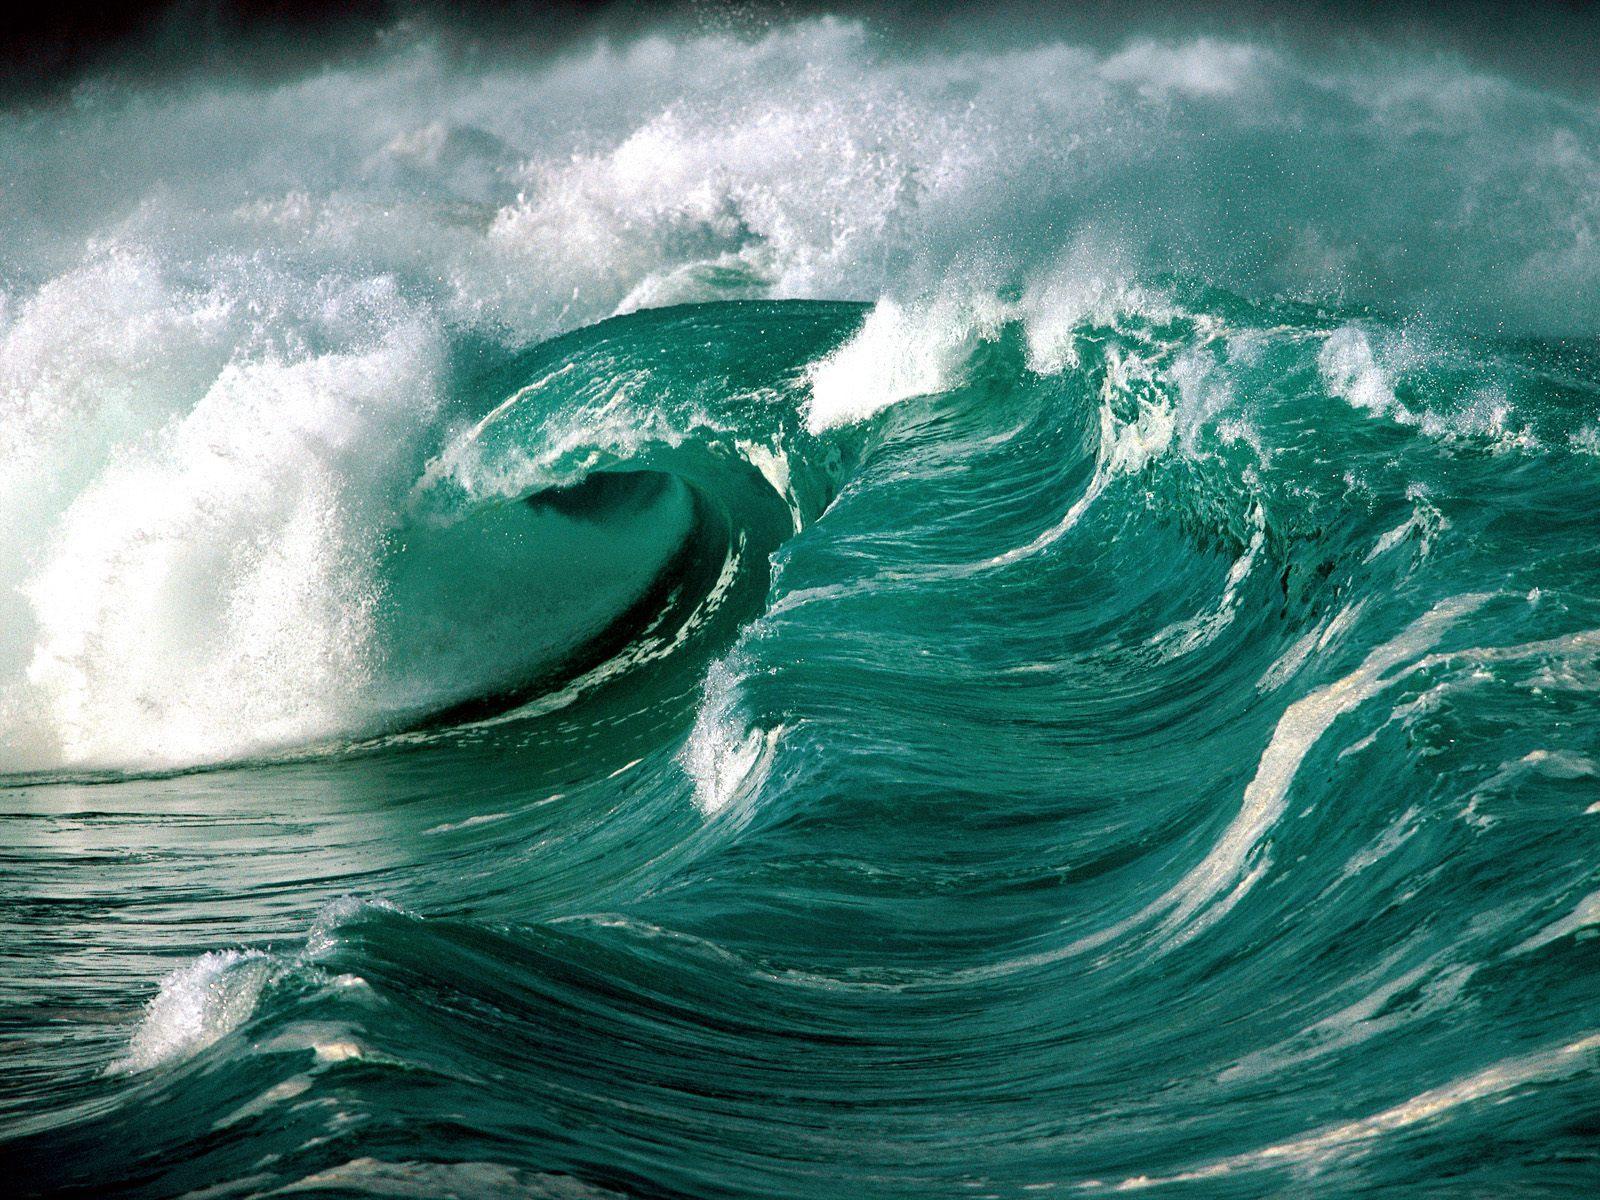 Tsunami waves on ocean free desktop background wallpaper image